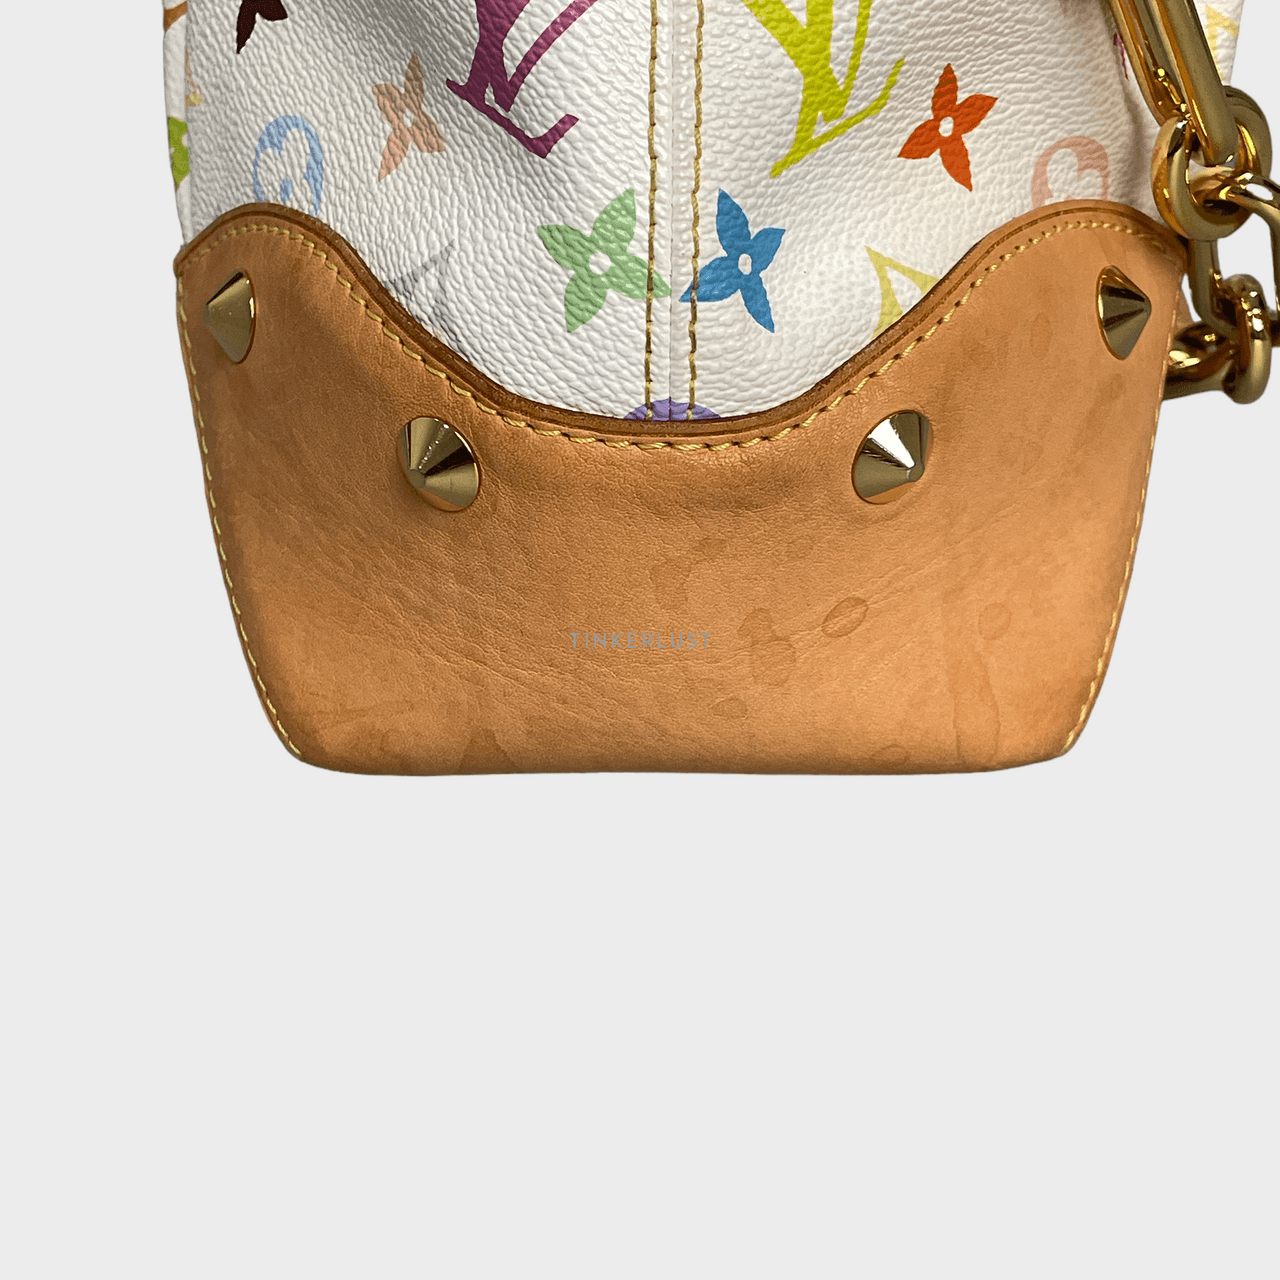 Louis Vuitton Judy White Multicolor Handbag